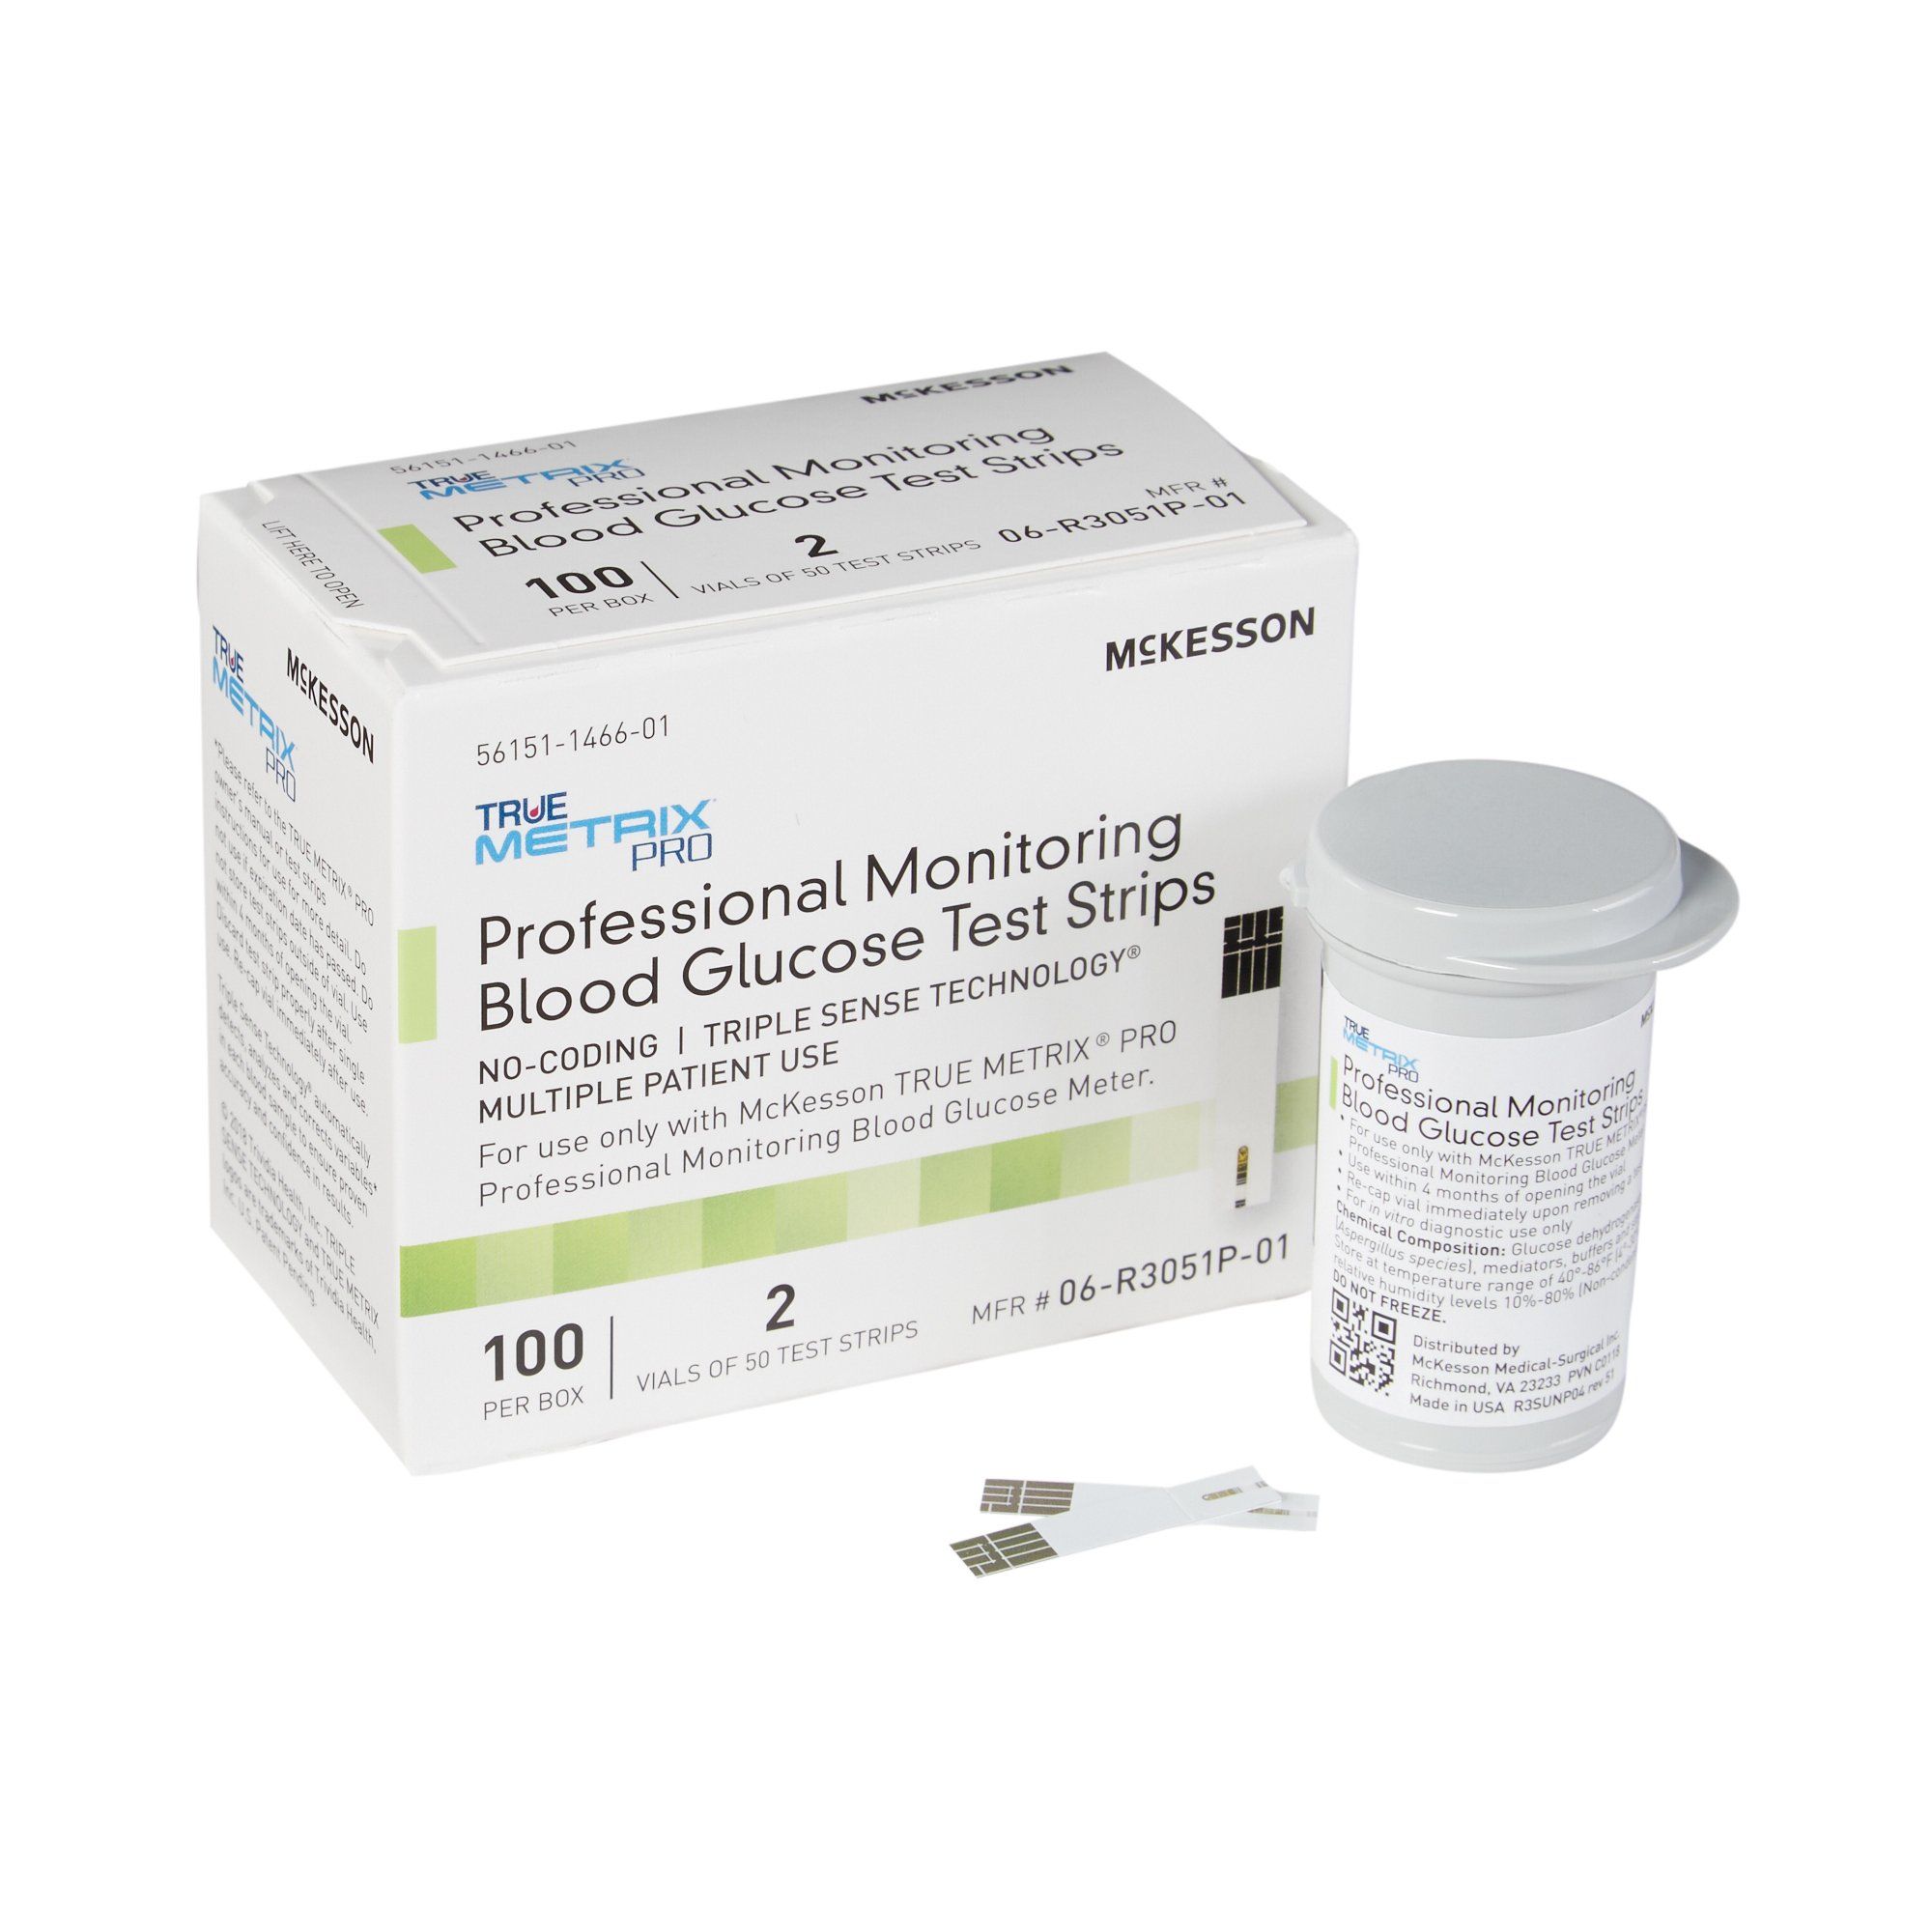 McKesson TRUE METRIX PRO Professional Monitoring Blood Glucose Test Strips - 100 ct